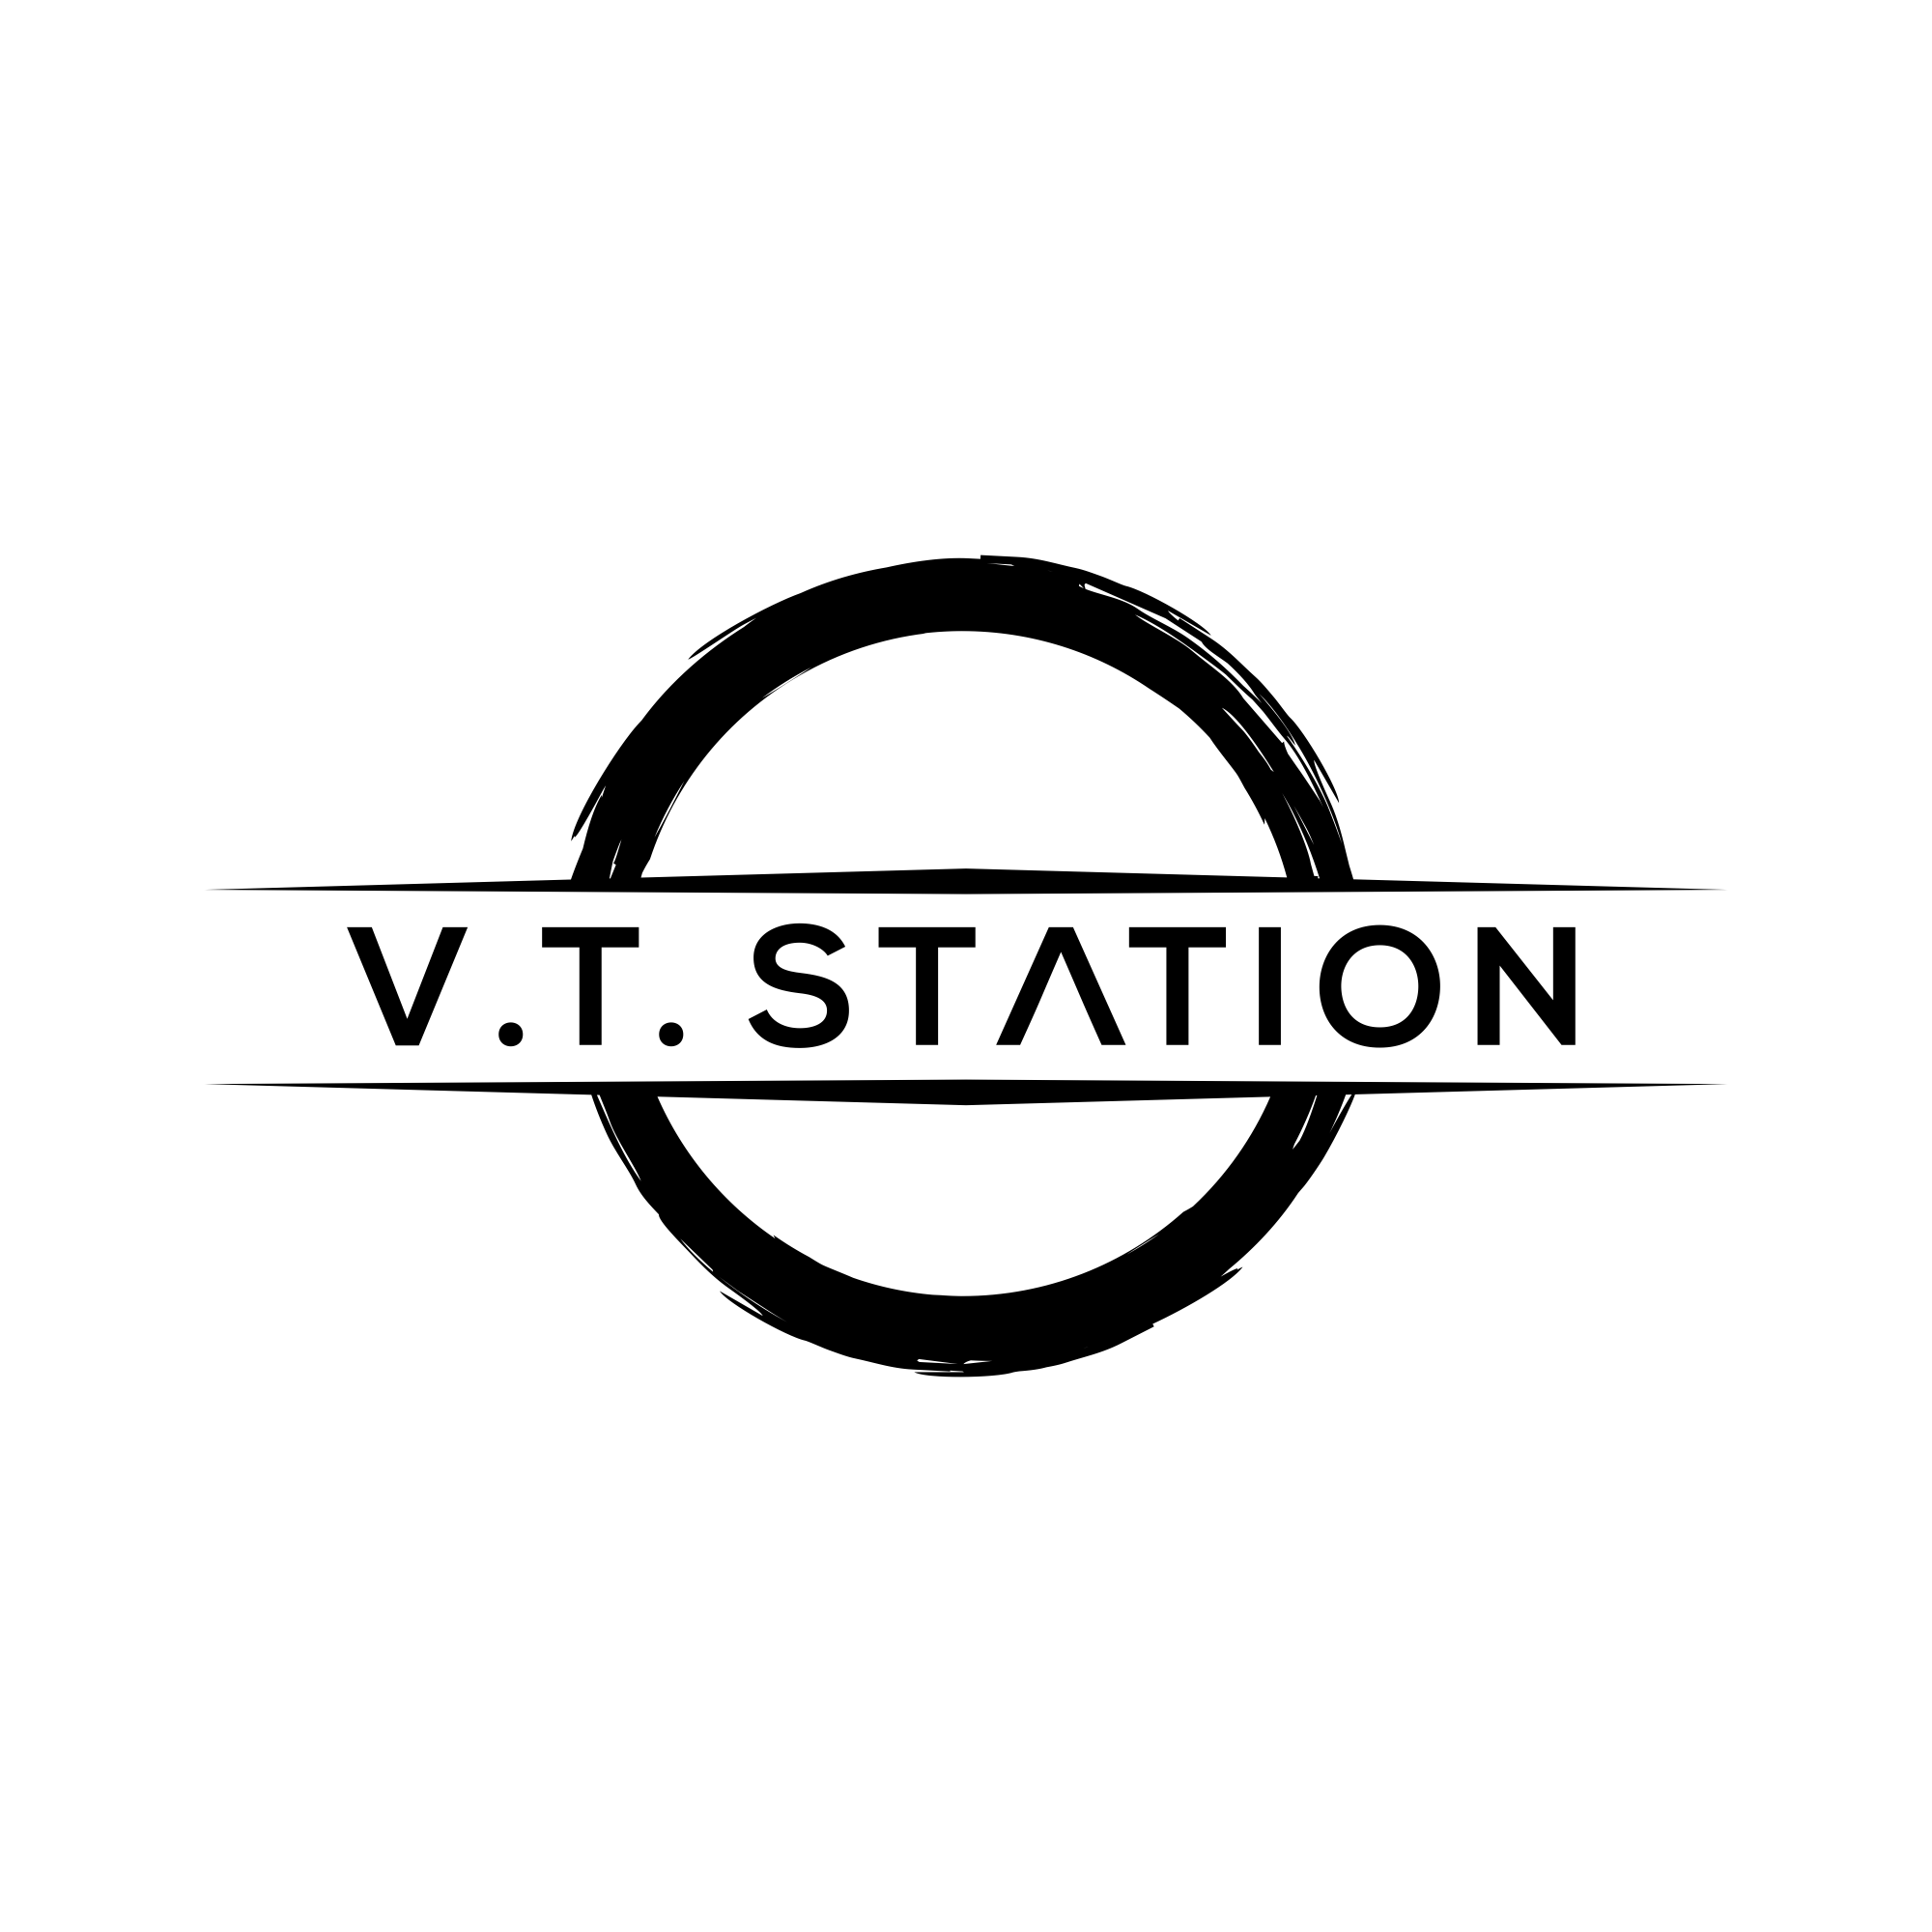 V.T. STATION